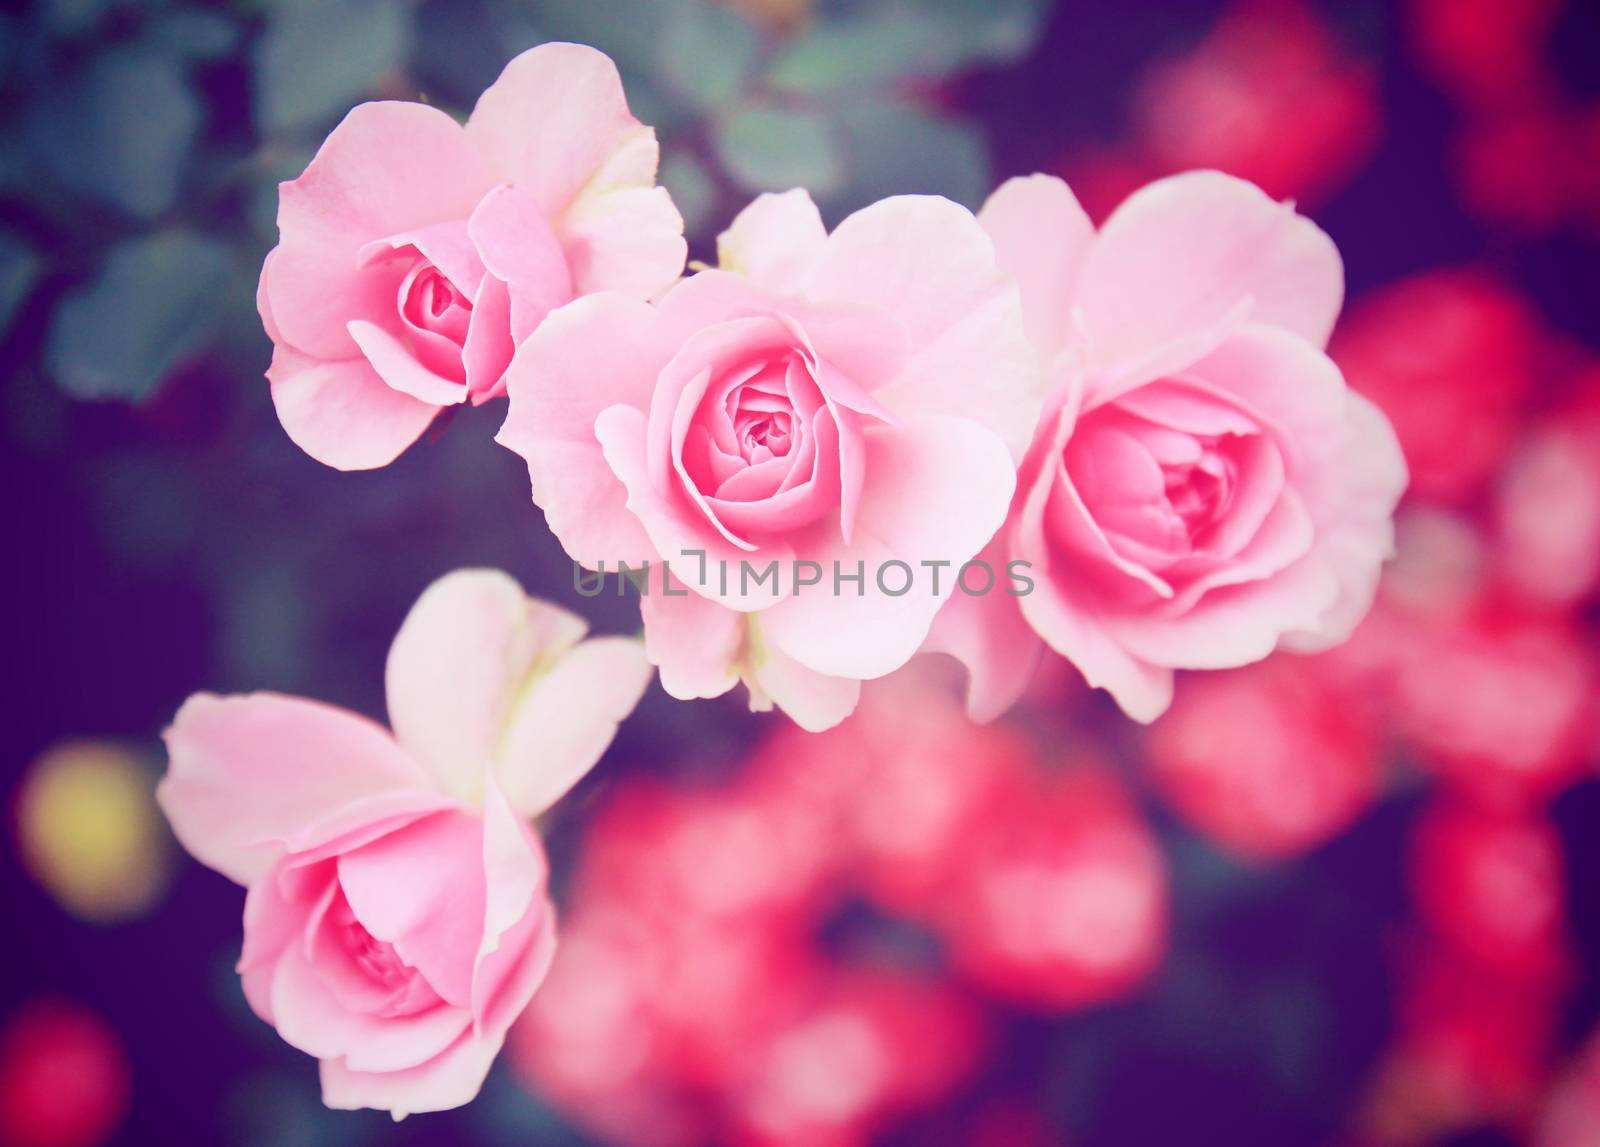 Pink rose in garden with retro filter effect by nuchylee